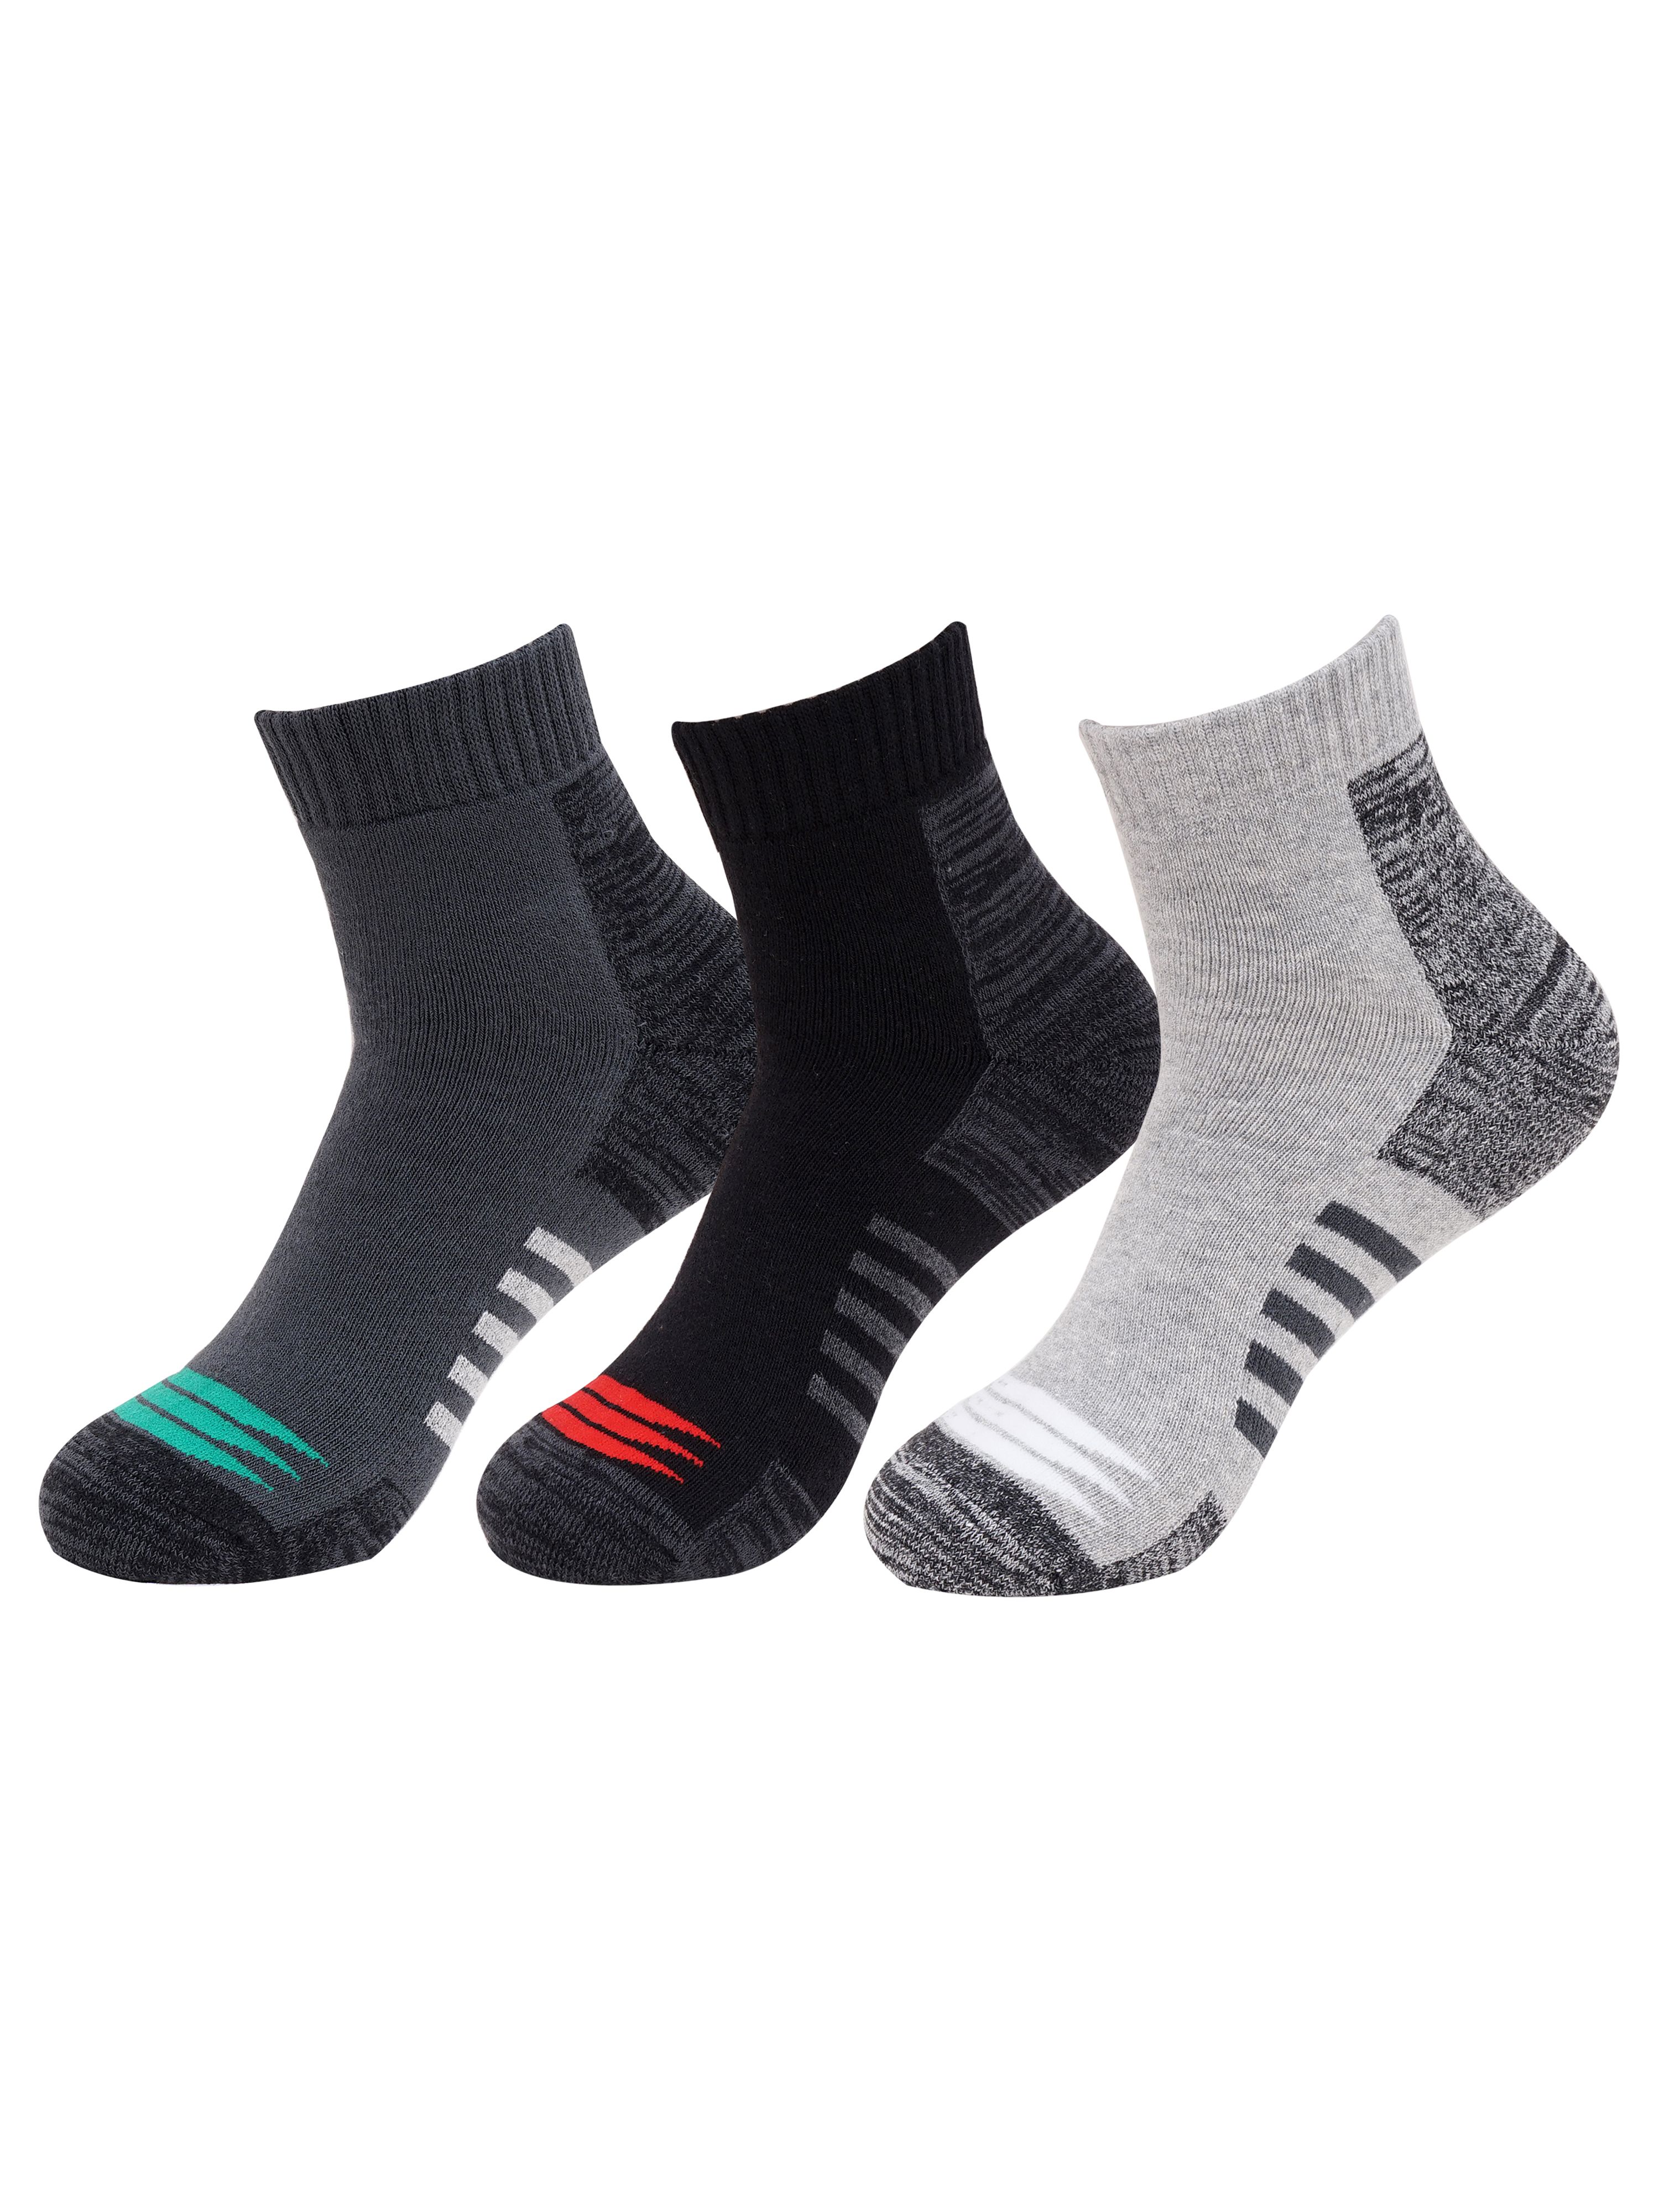 socks Merchandise: Buy Official socks Jerseys & T Shirts Online | shop